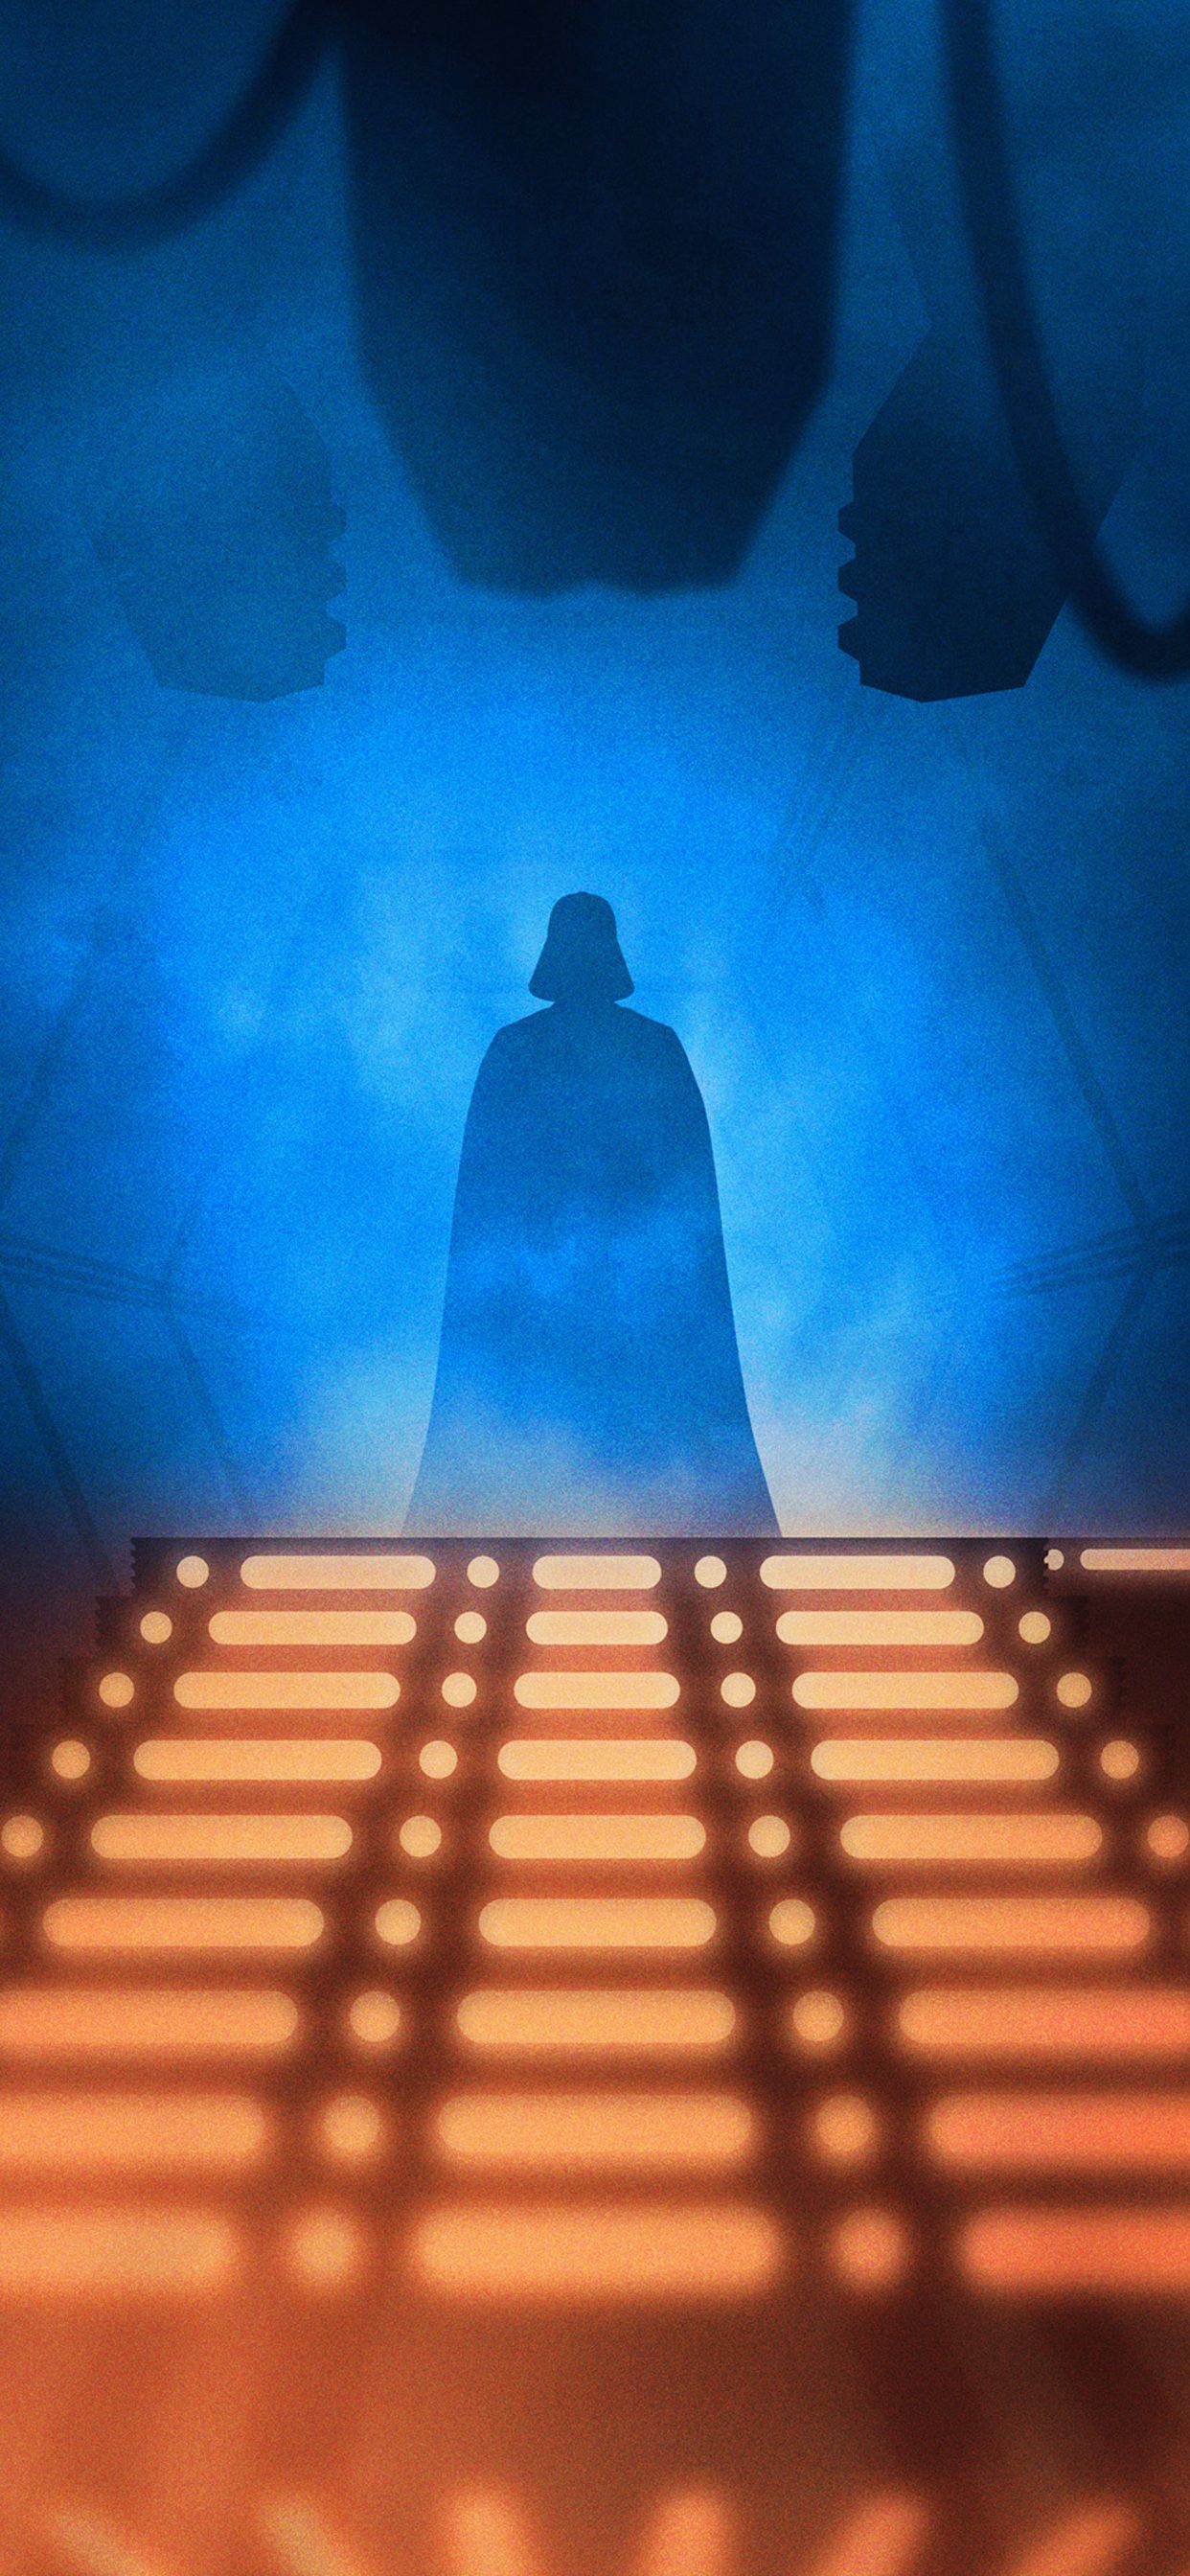 Star Wars iPhone Wallpaper On